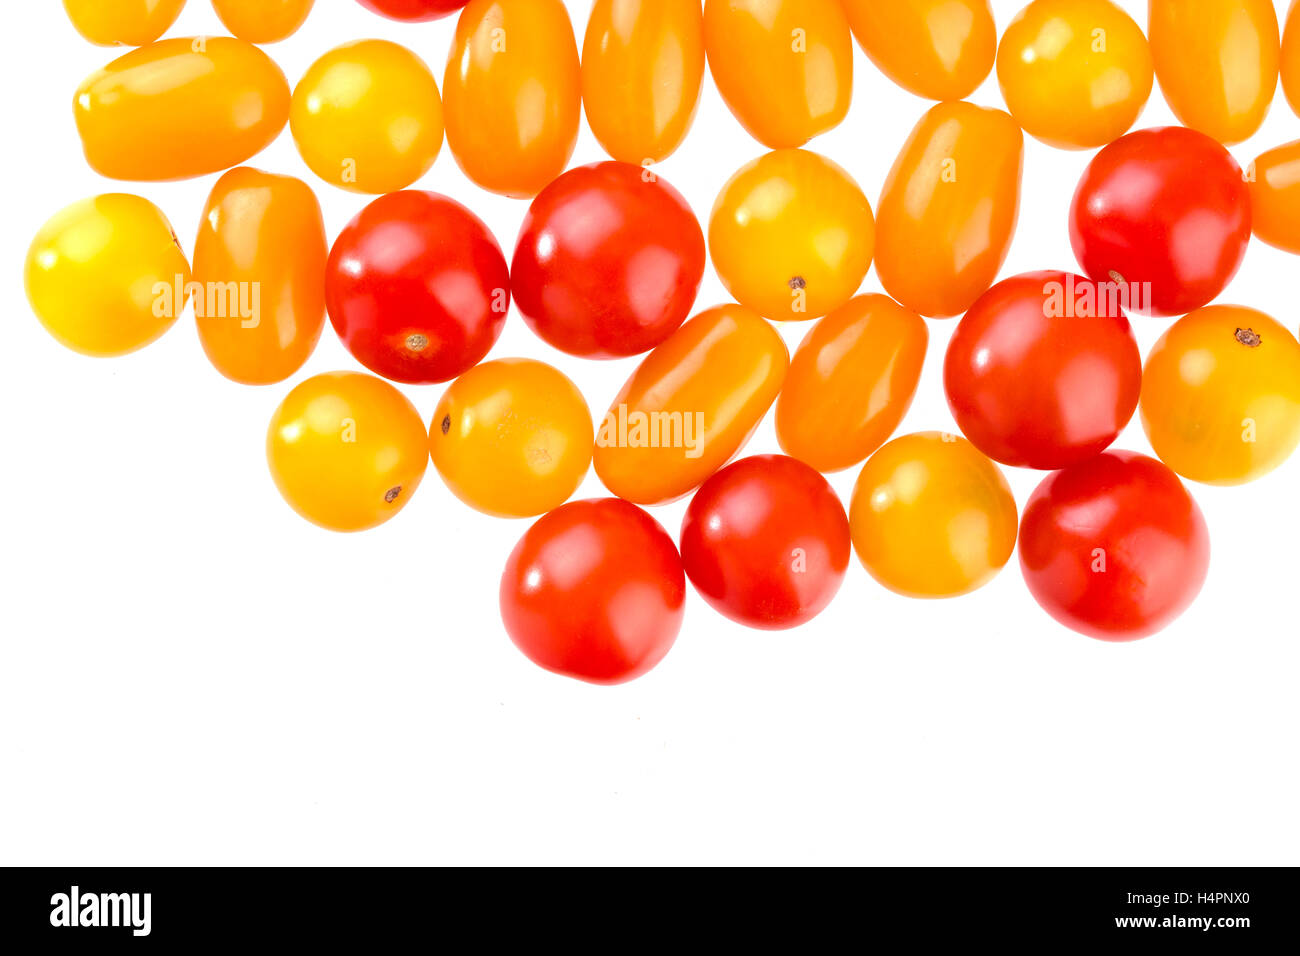 Cherry tomato isolated on white background Stock Photo